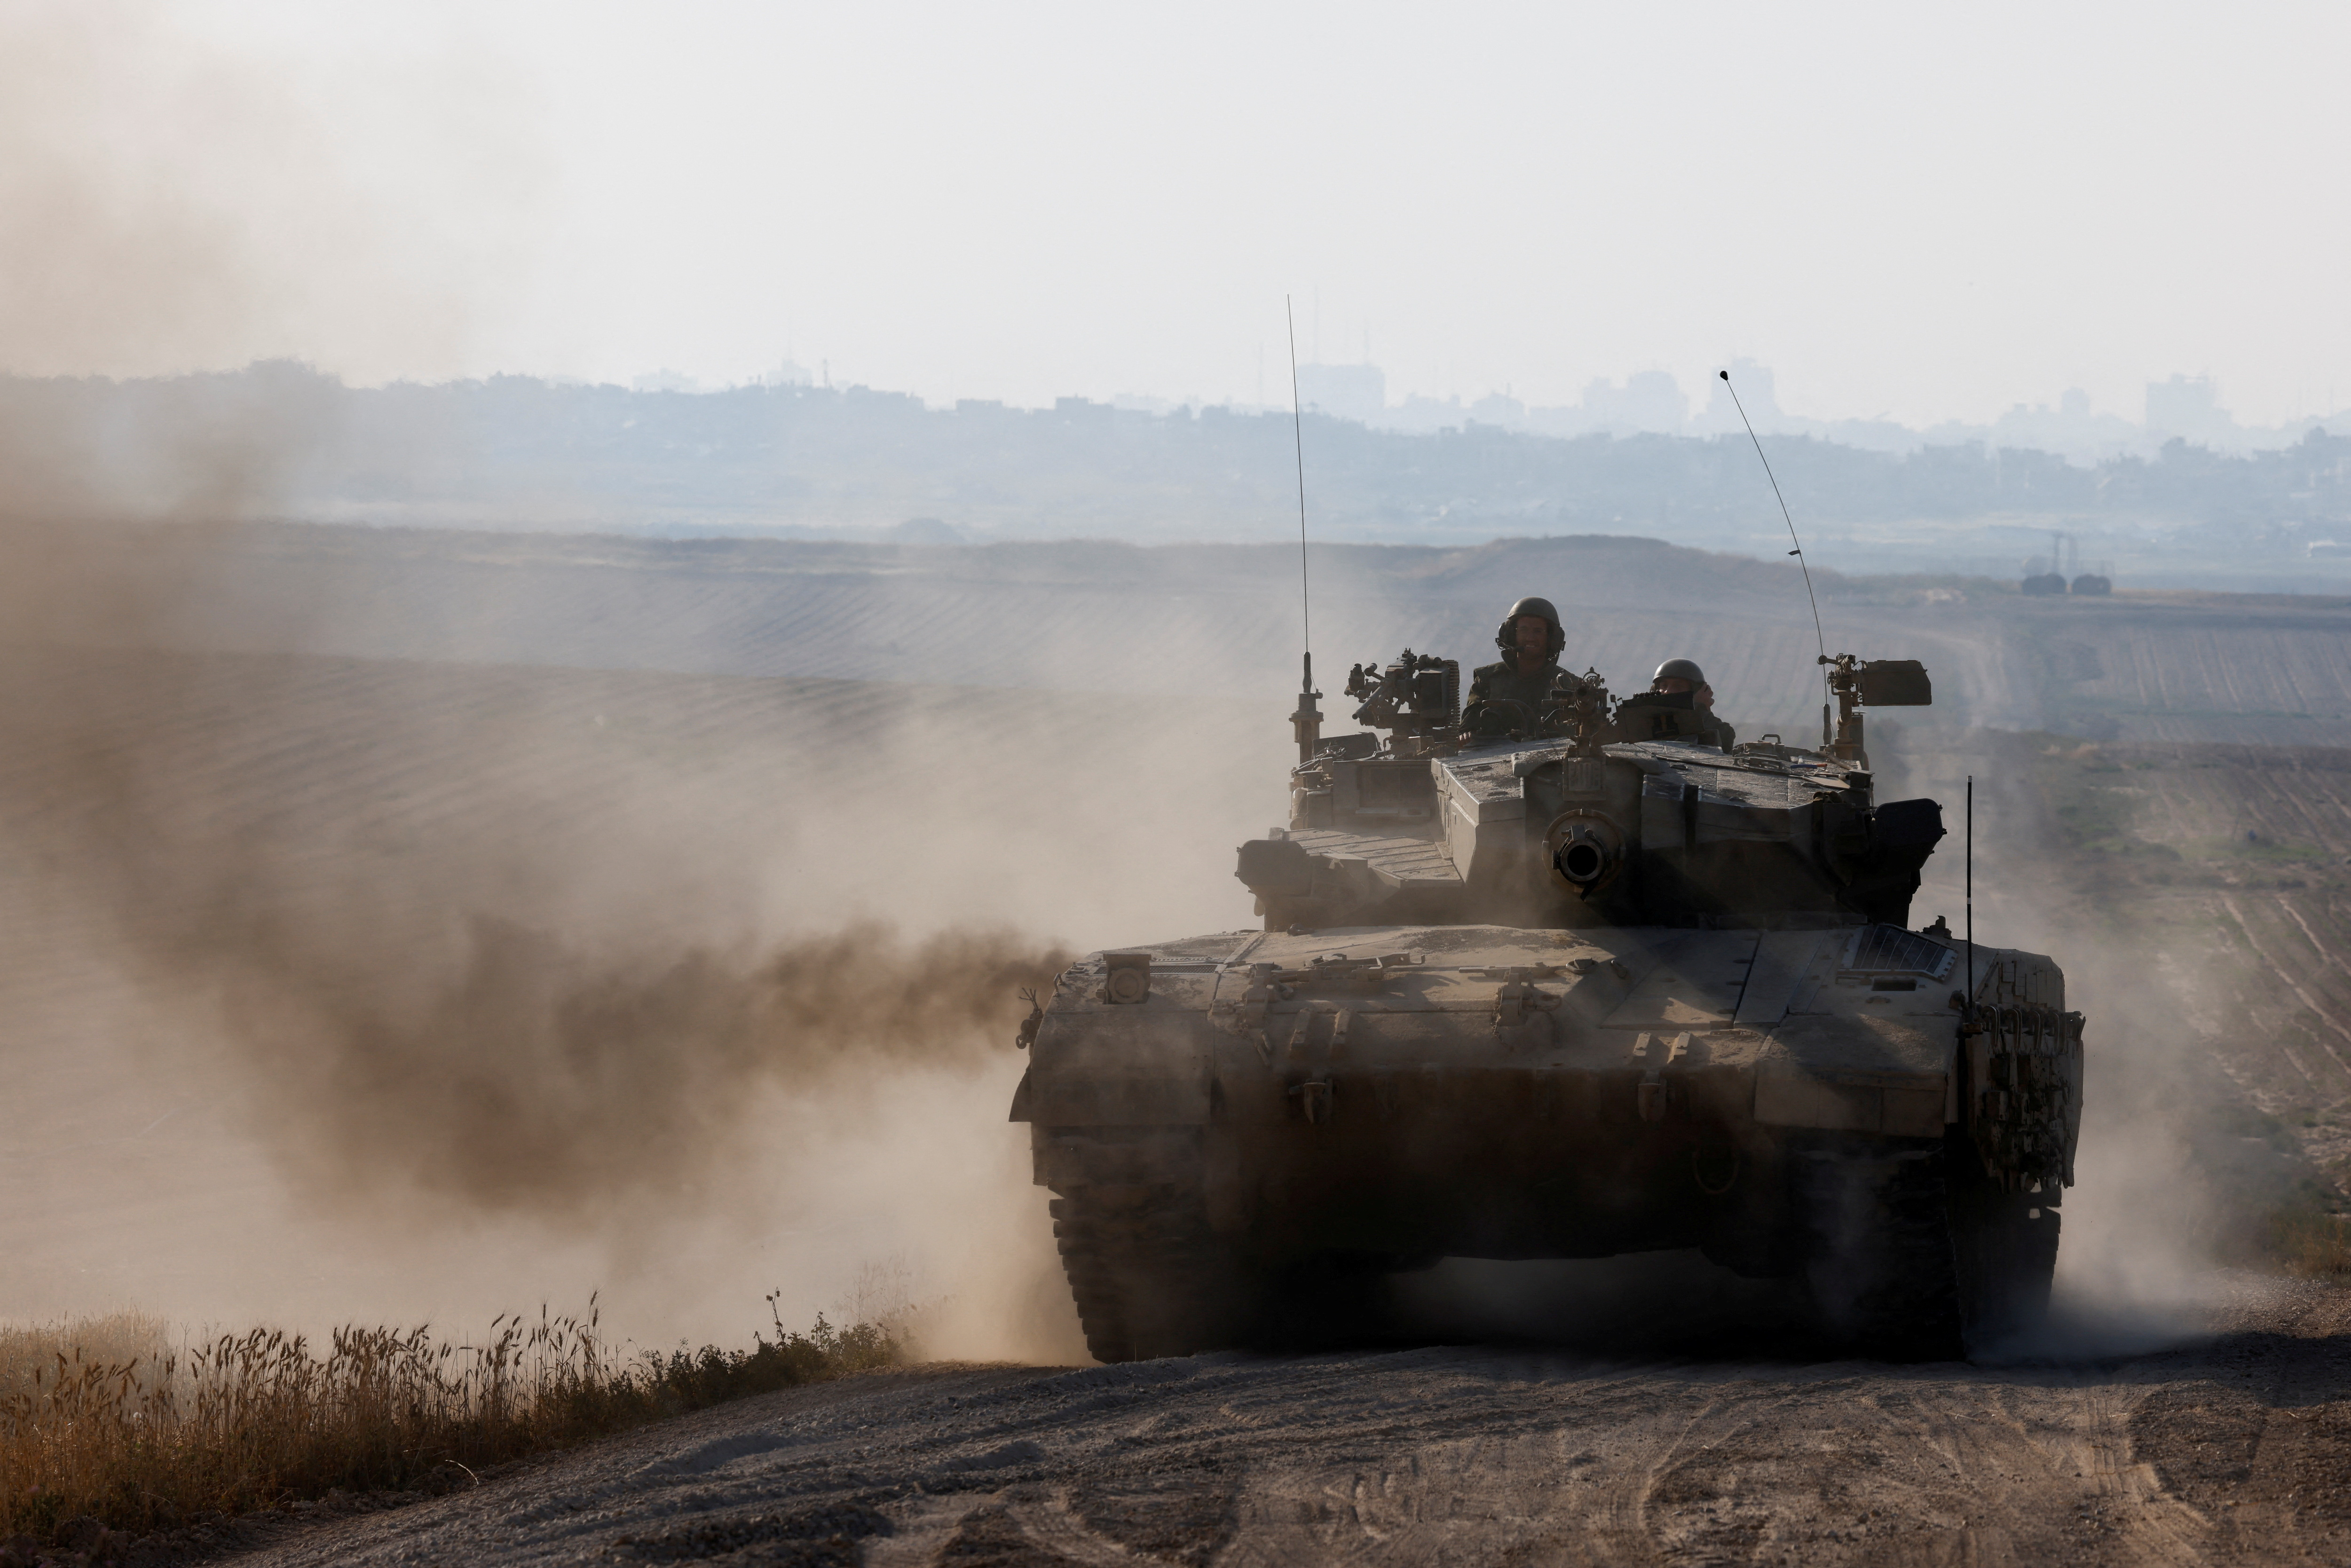 Israeli tank maneuvers near Israel's border with Gaza